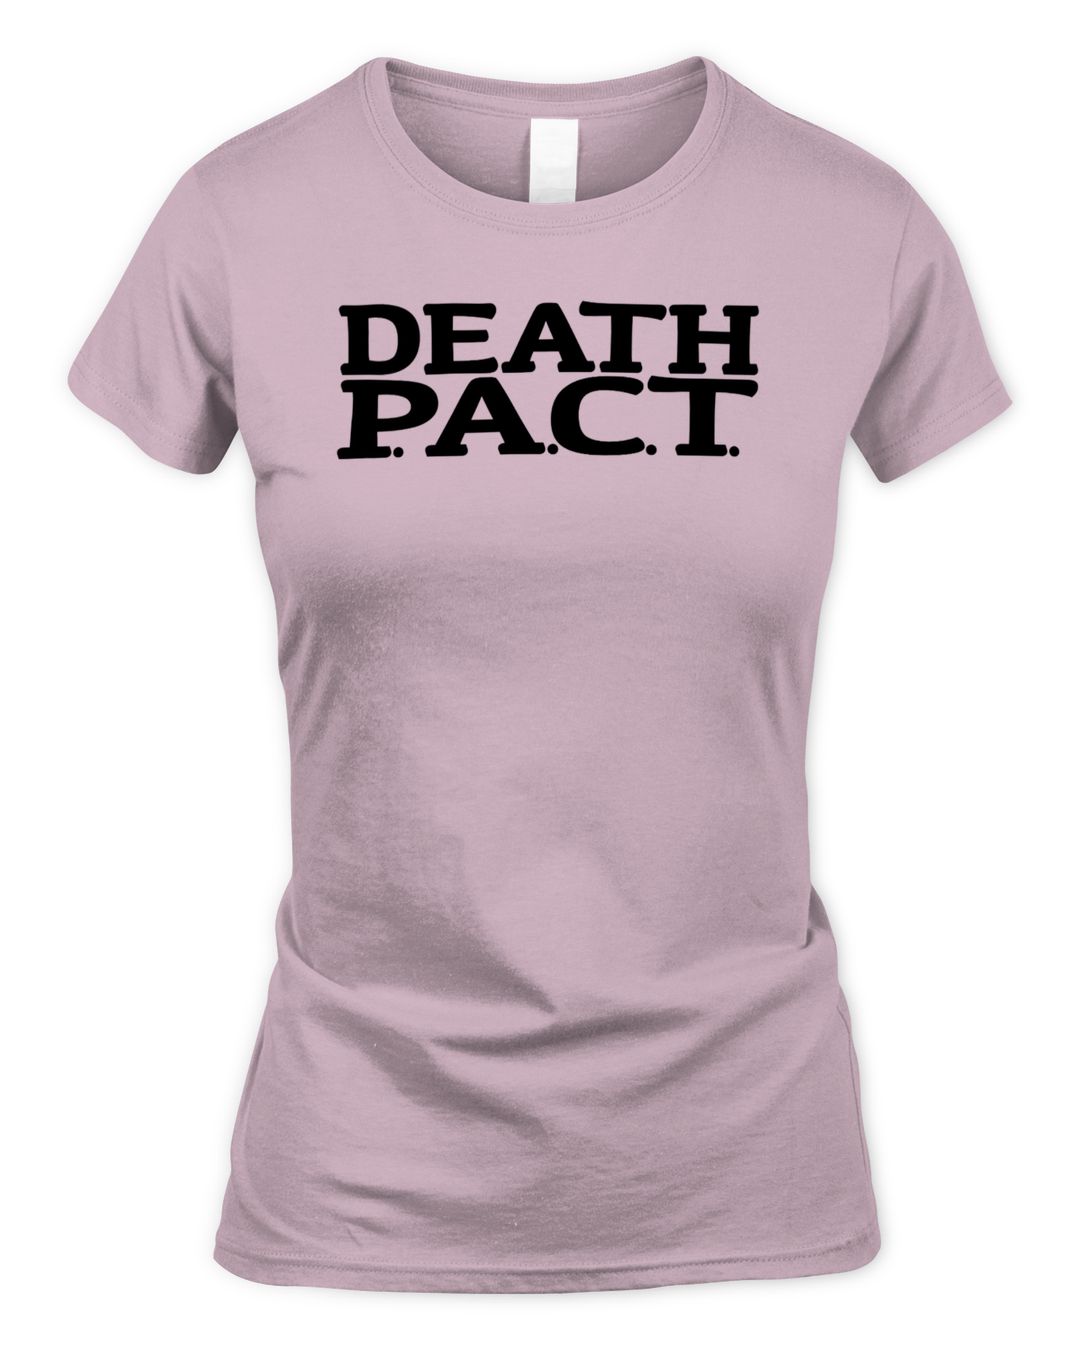 Bfdi Merch Death Pact Shirt